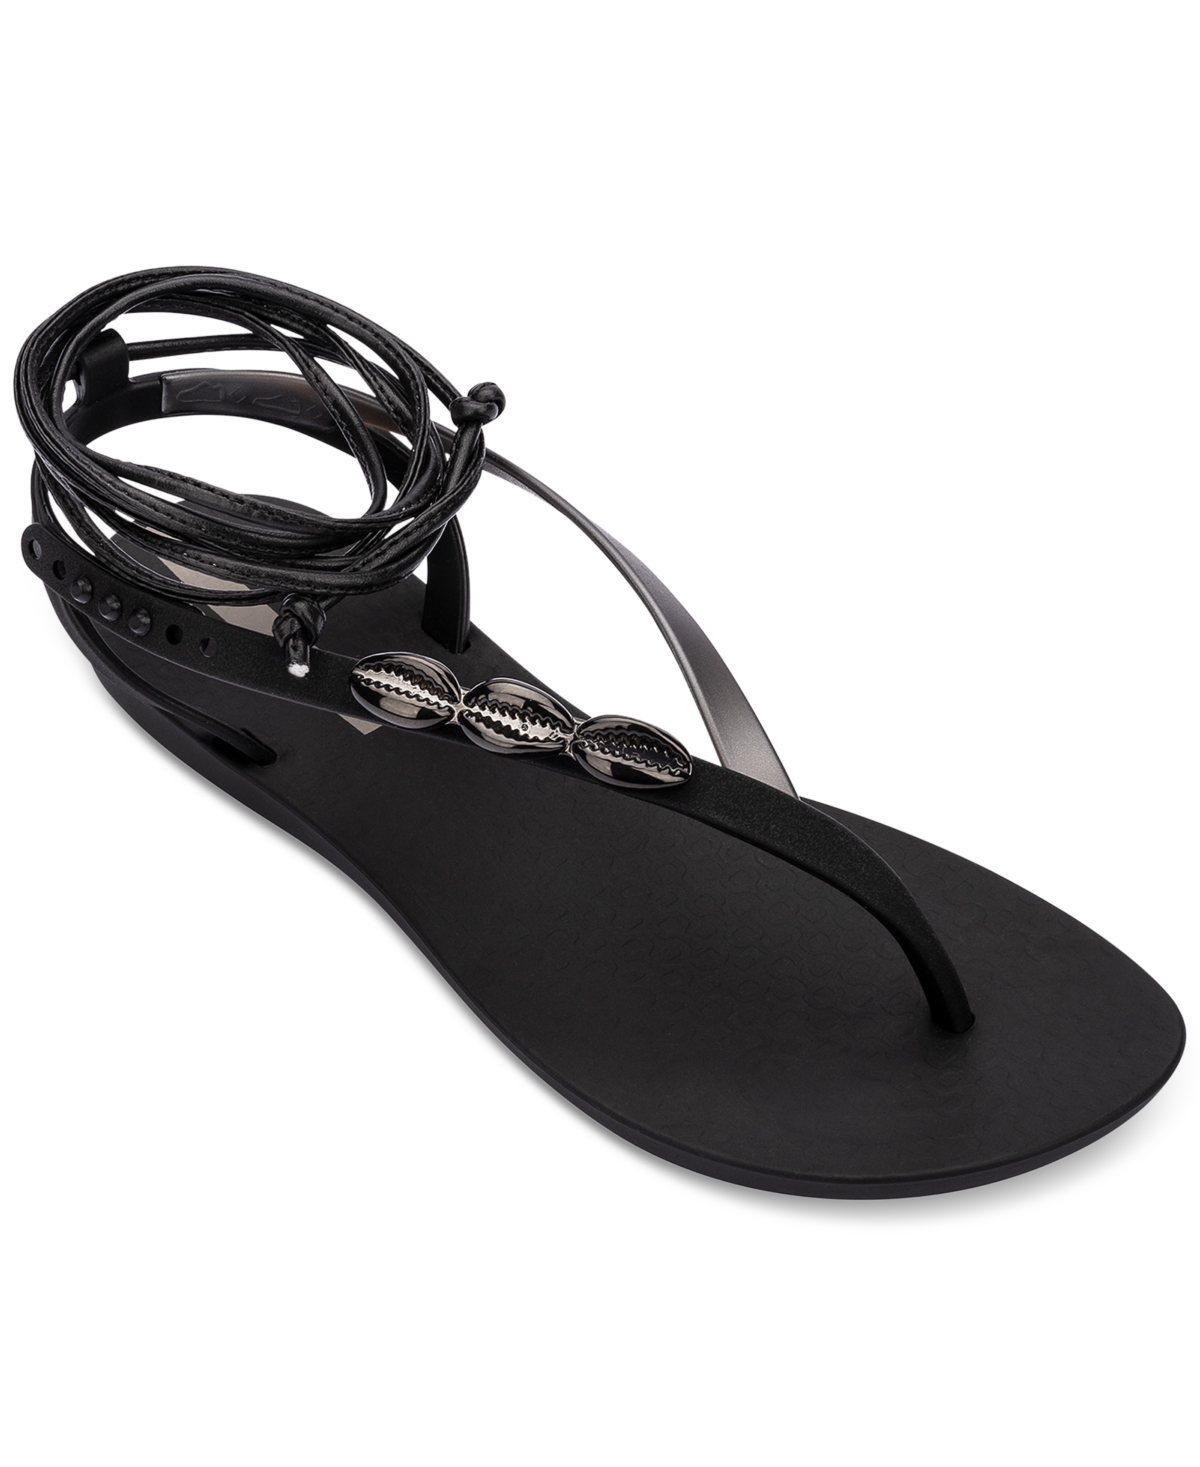 Salty Fem Ankle-Tie Strappy Sandals - Black/silv